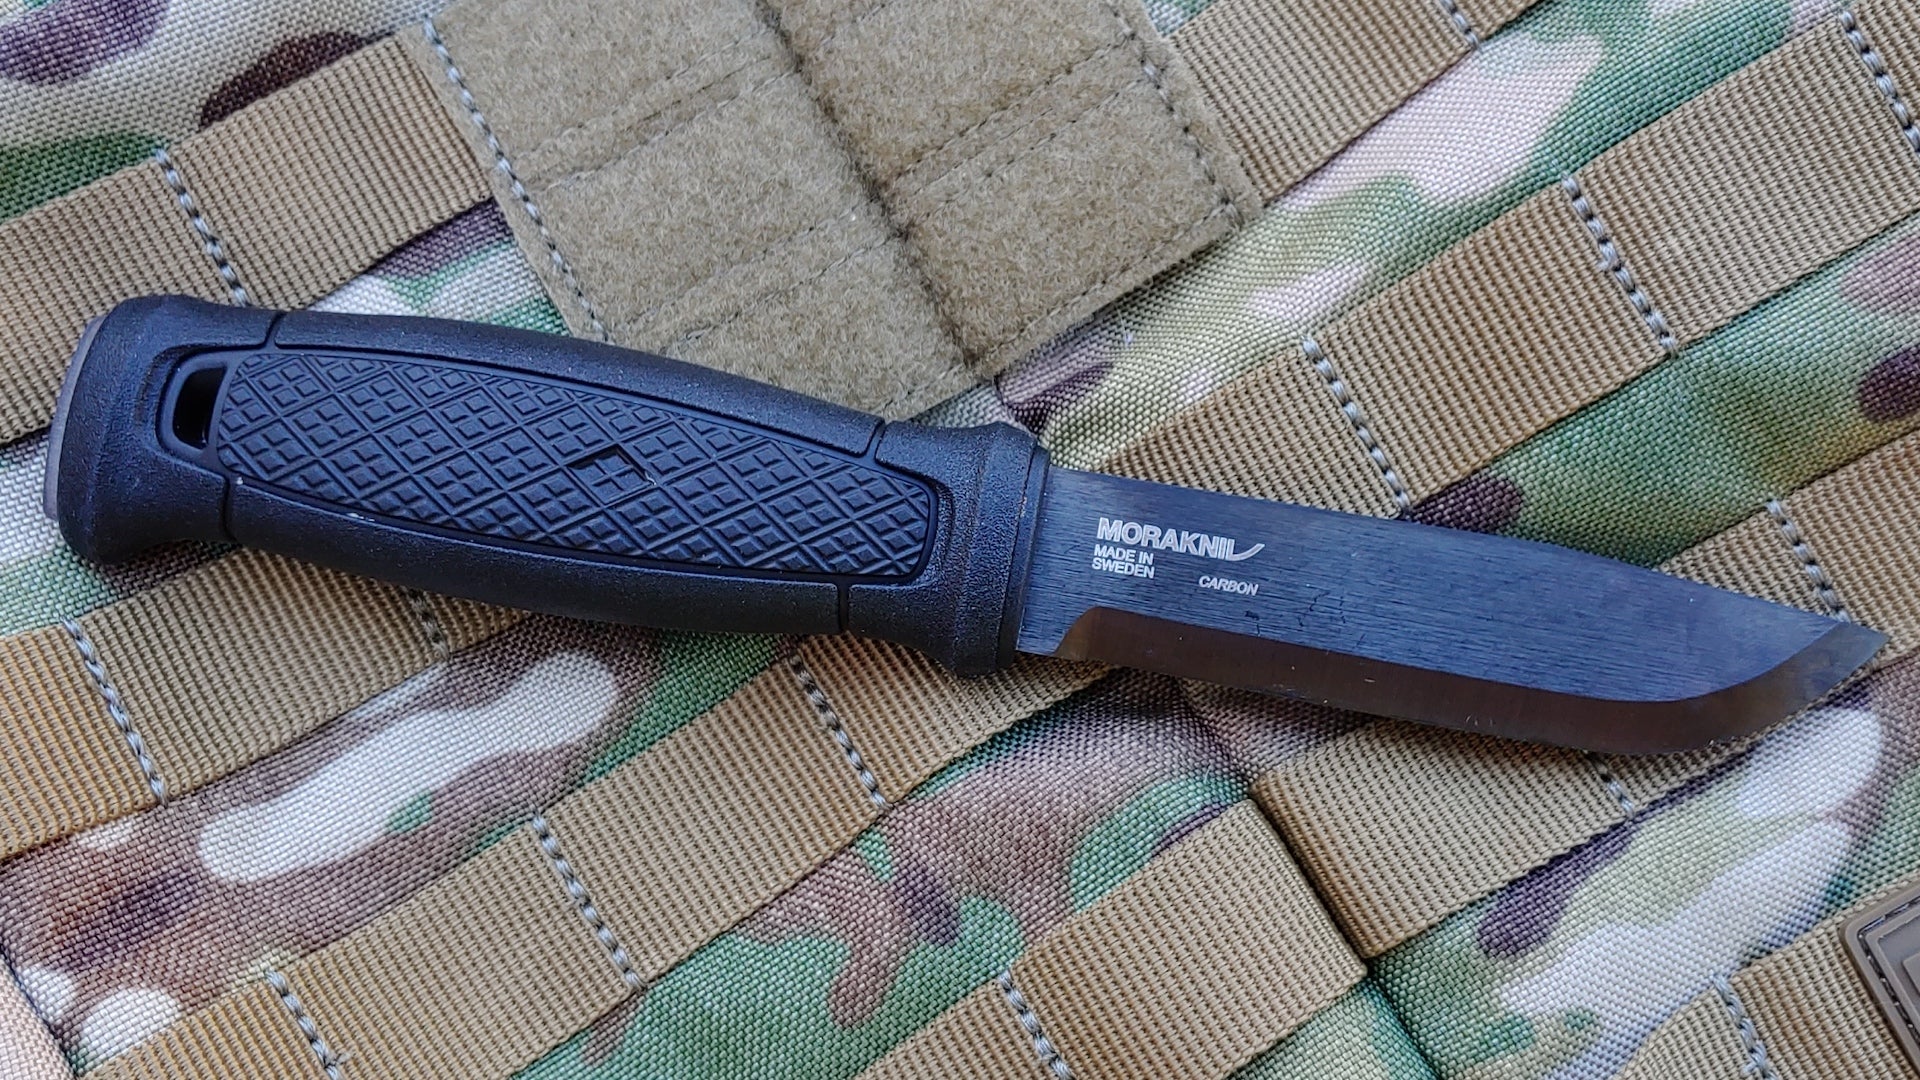 Mora Garberg bushcraft knife, Multimount